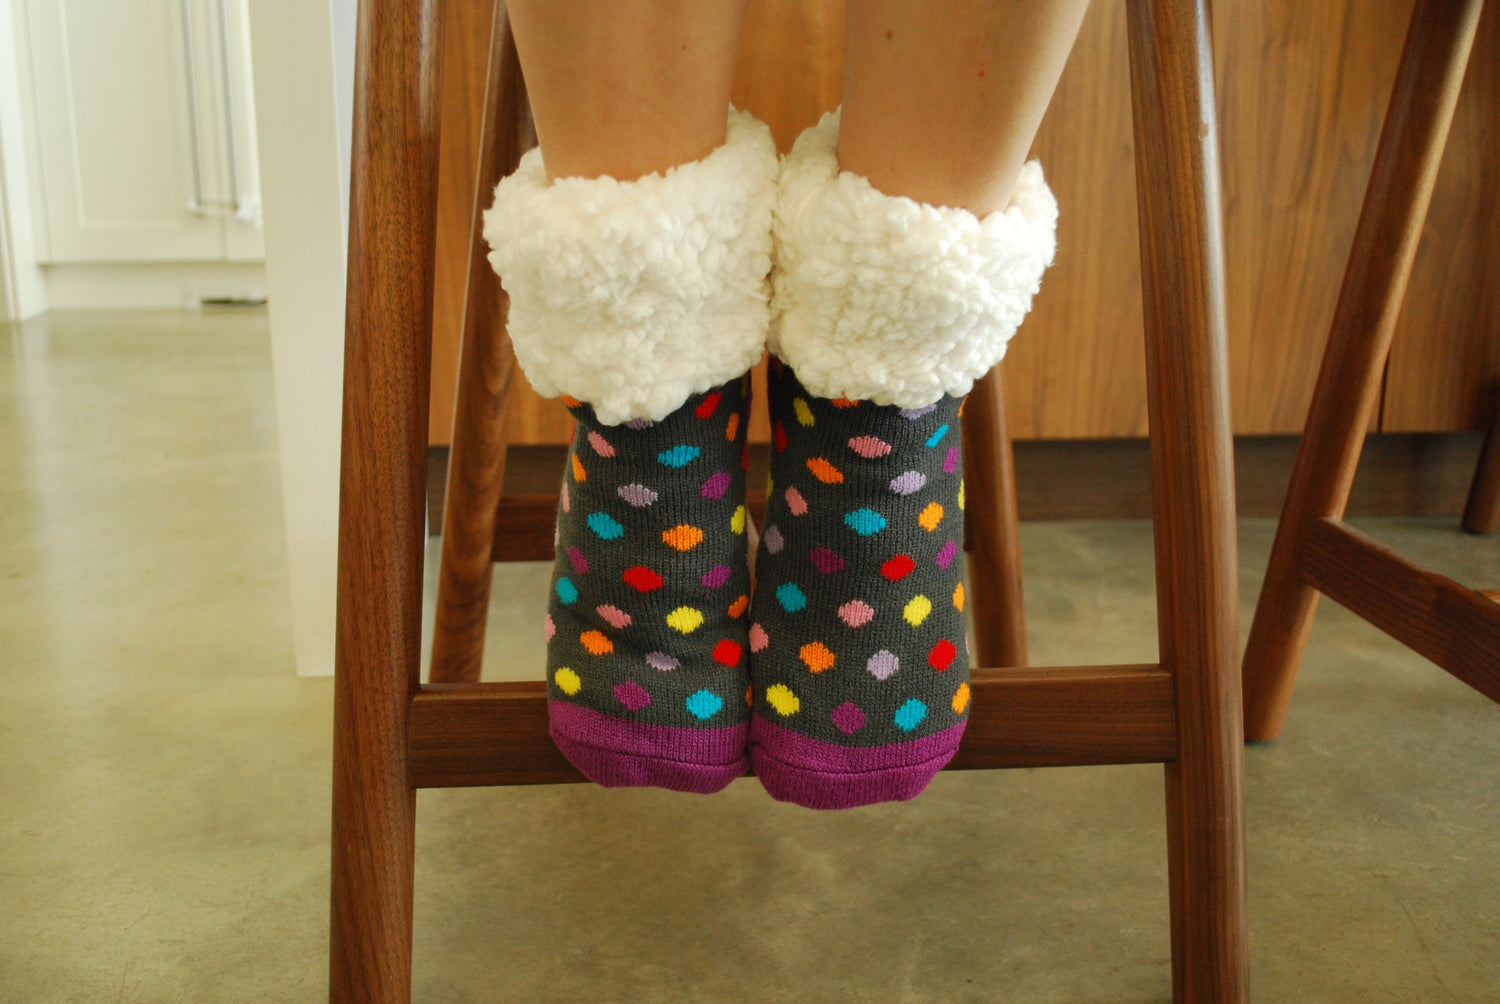 Classic Slipper Socks  Autumn White – Pudus Lifestyle Co. Canada